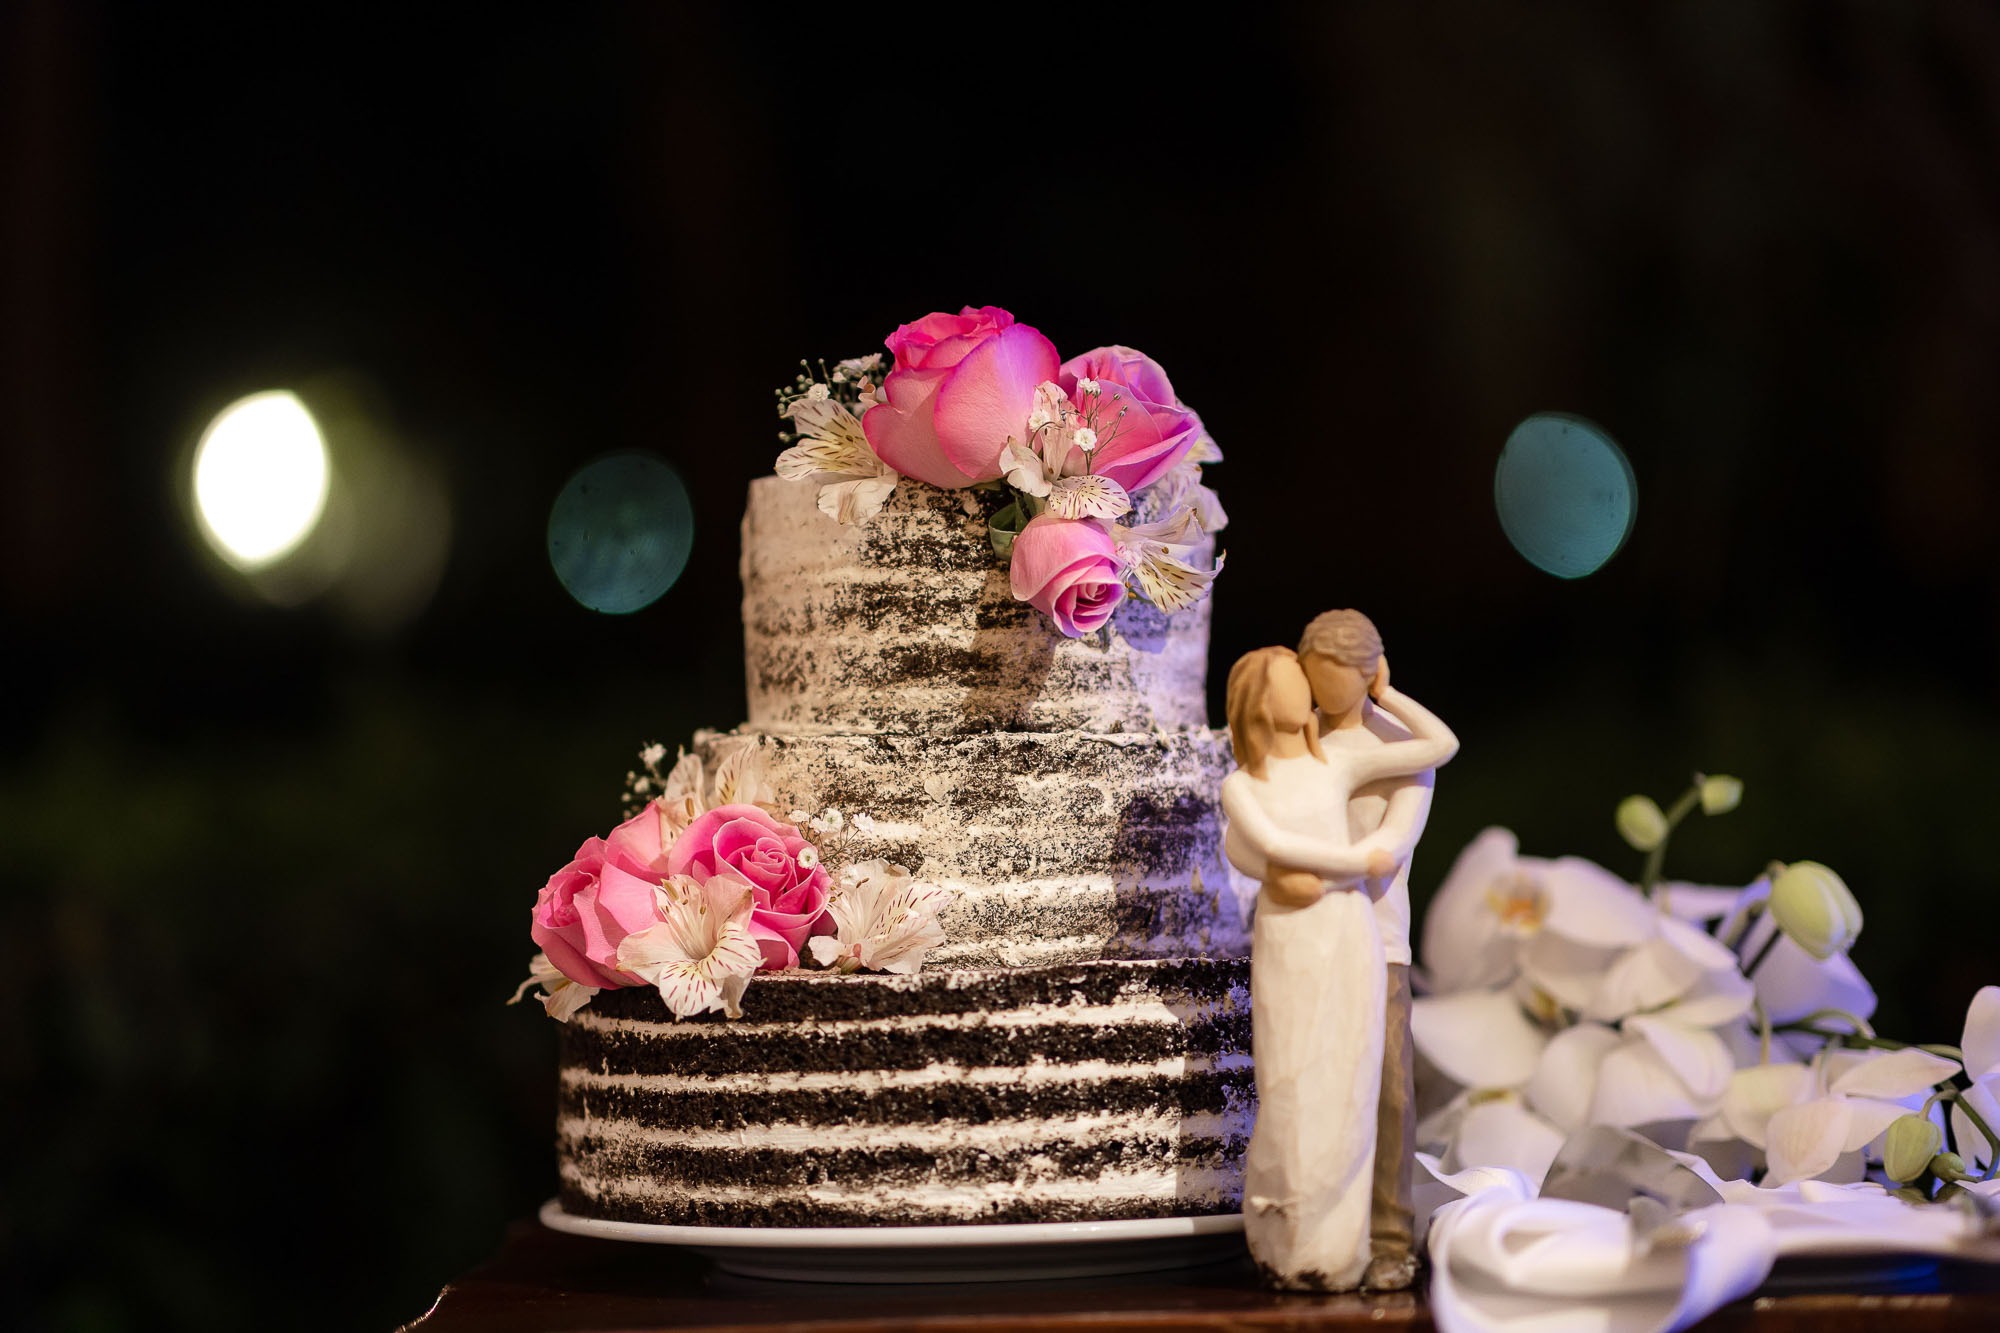 Wedding cake with bride and groom figurine